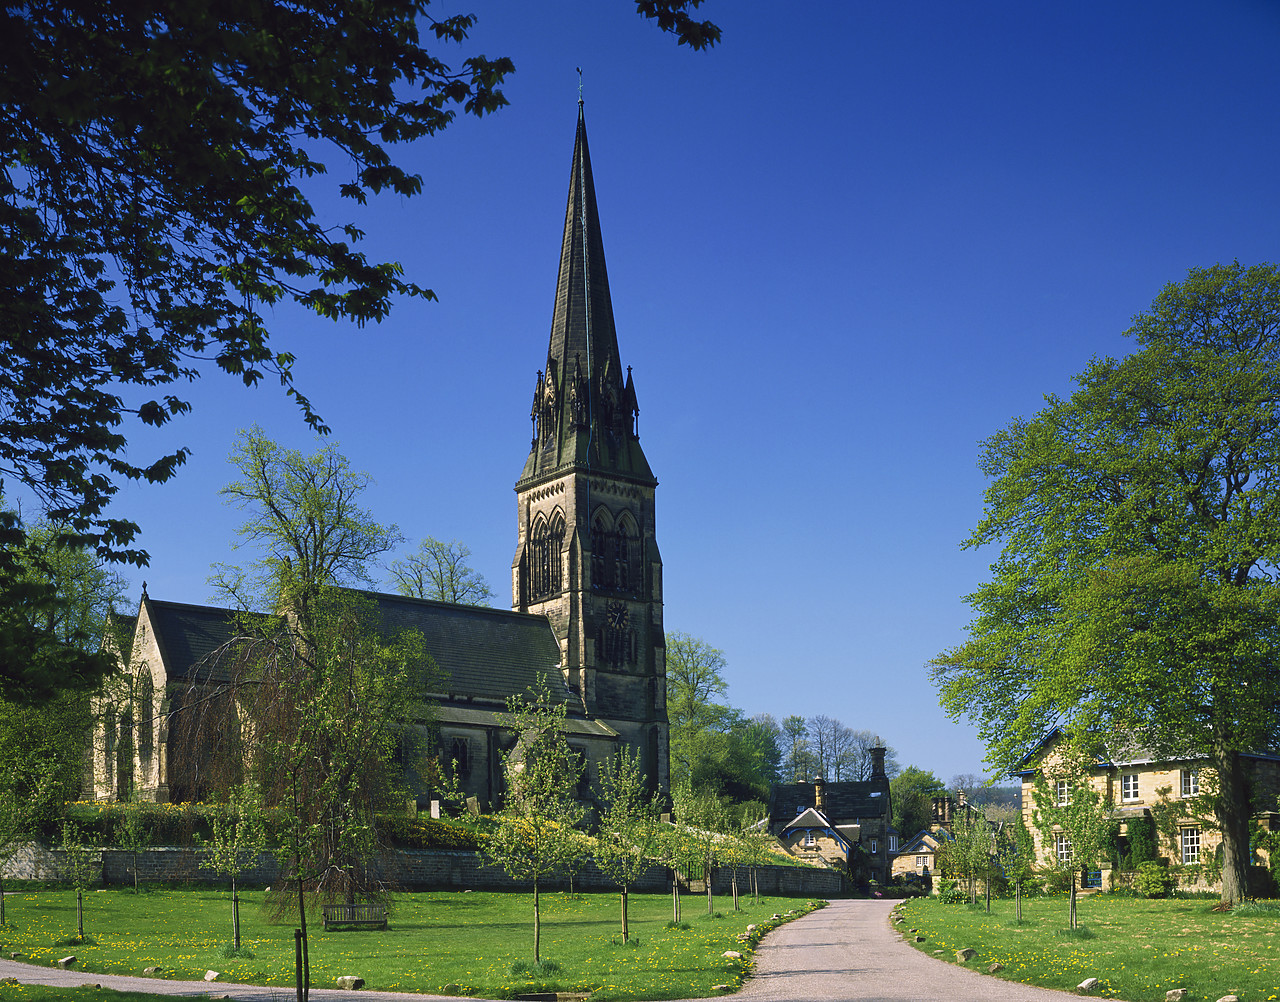 #913391-1 - Church at Edensor, Peak District National Park, Derbyshire, England